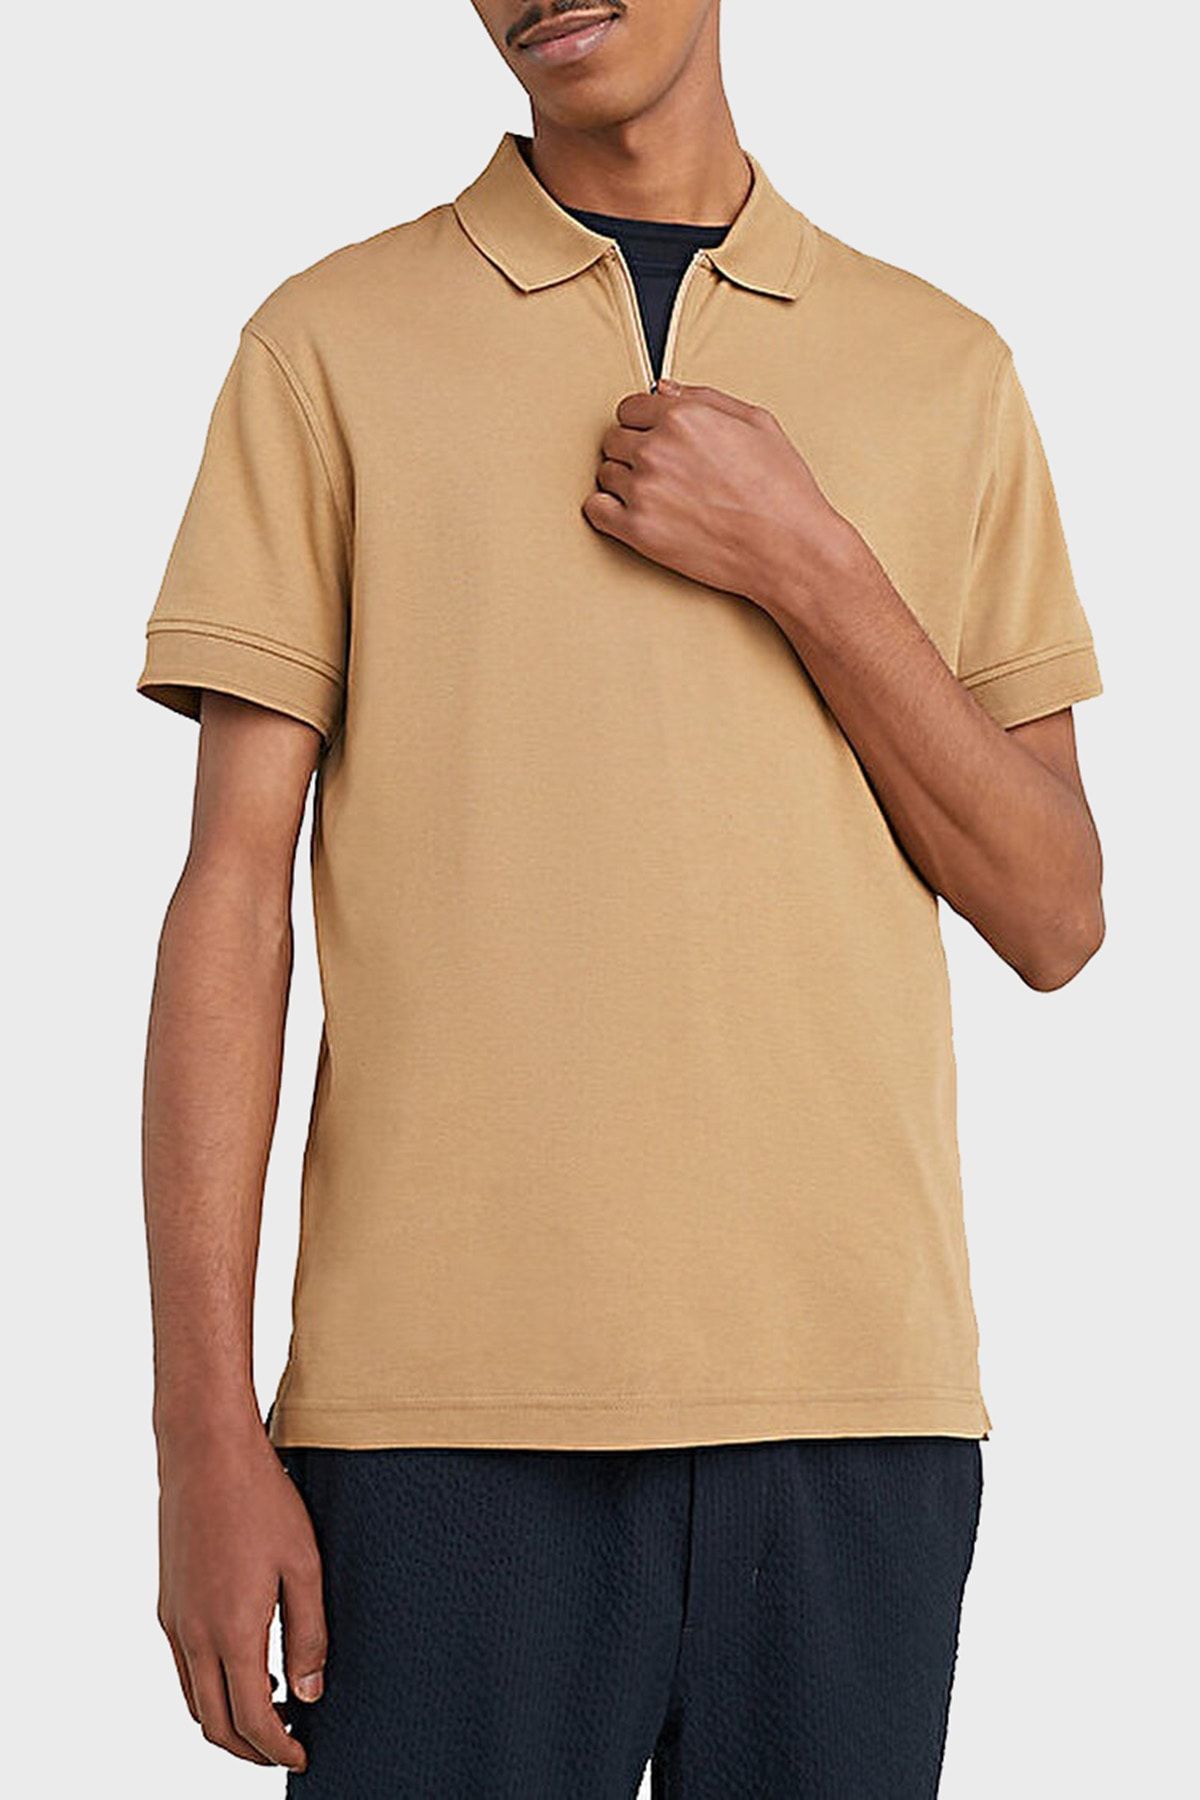 Tommy Hilfiger Pamuk Slim Fit Fermuarlı Polo T Shirt Erkek Polo T Shirt Mw0mw30762 Gw8